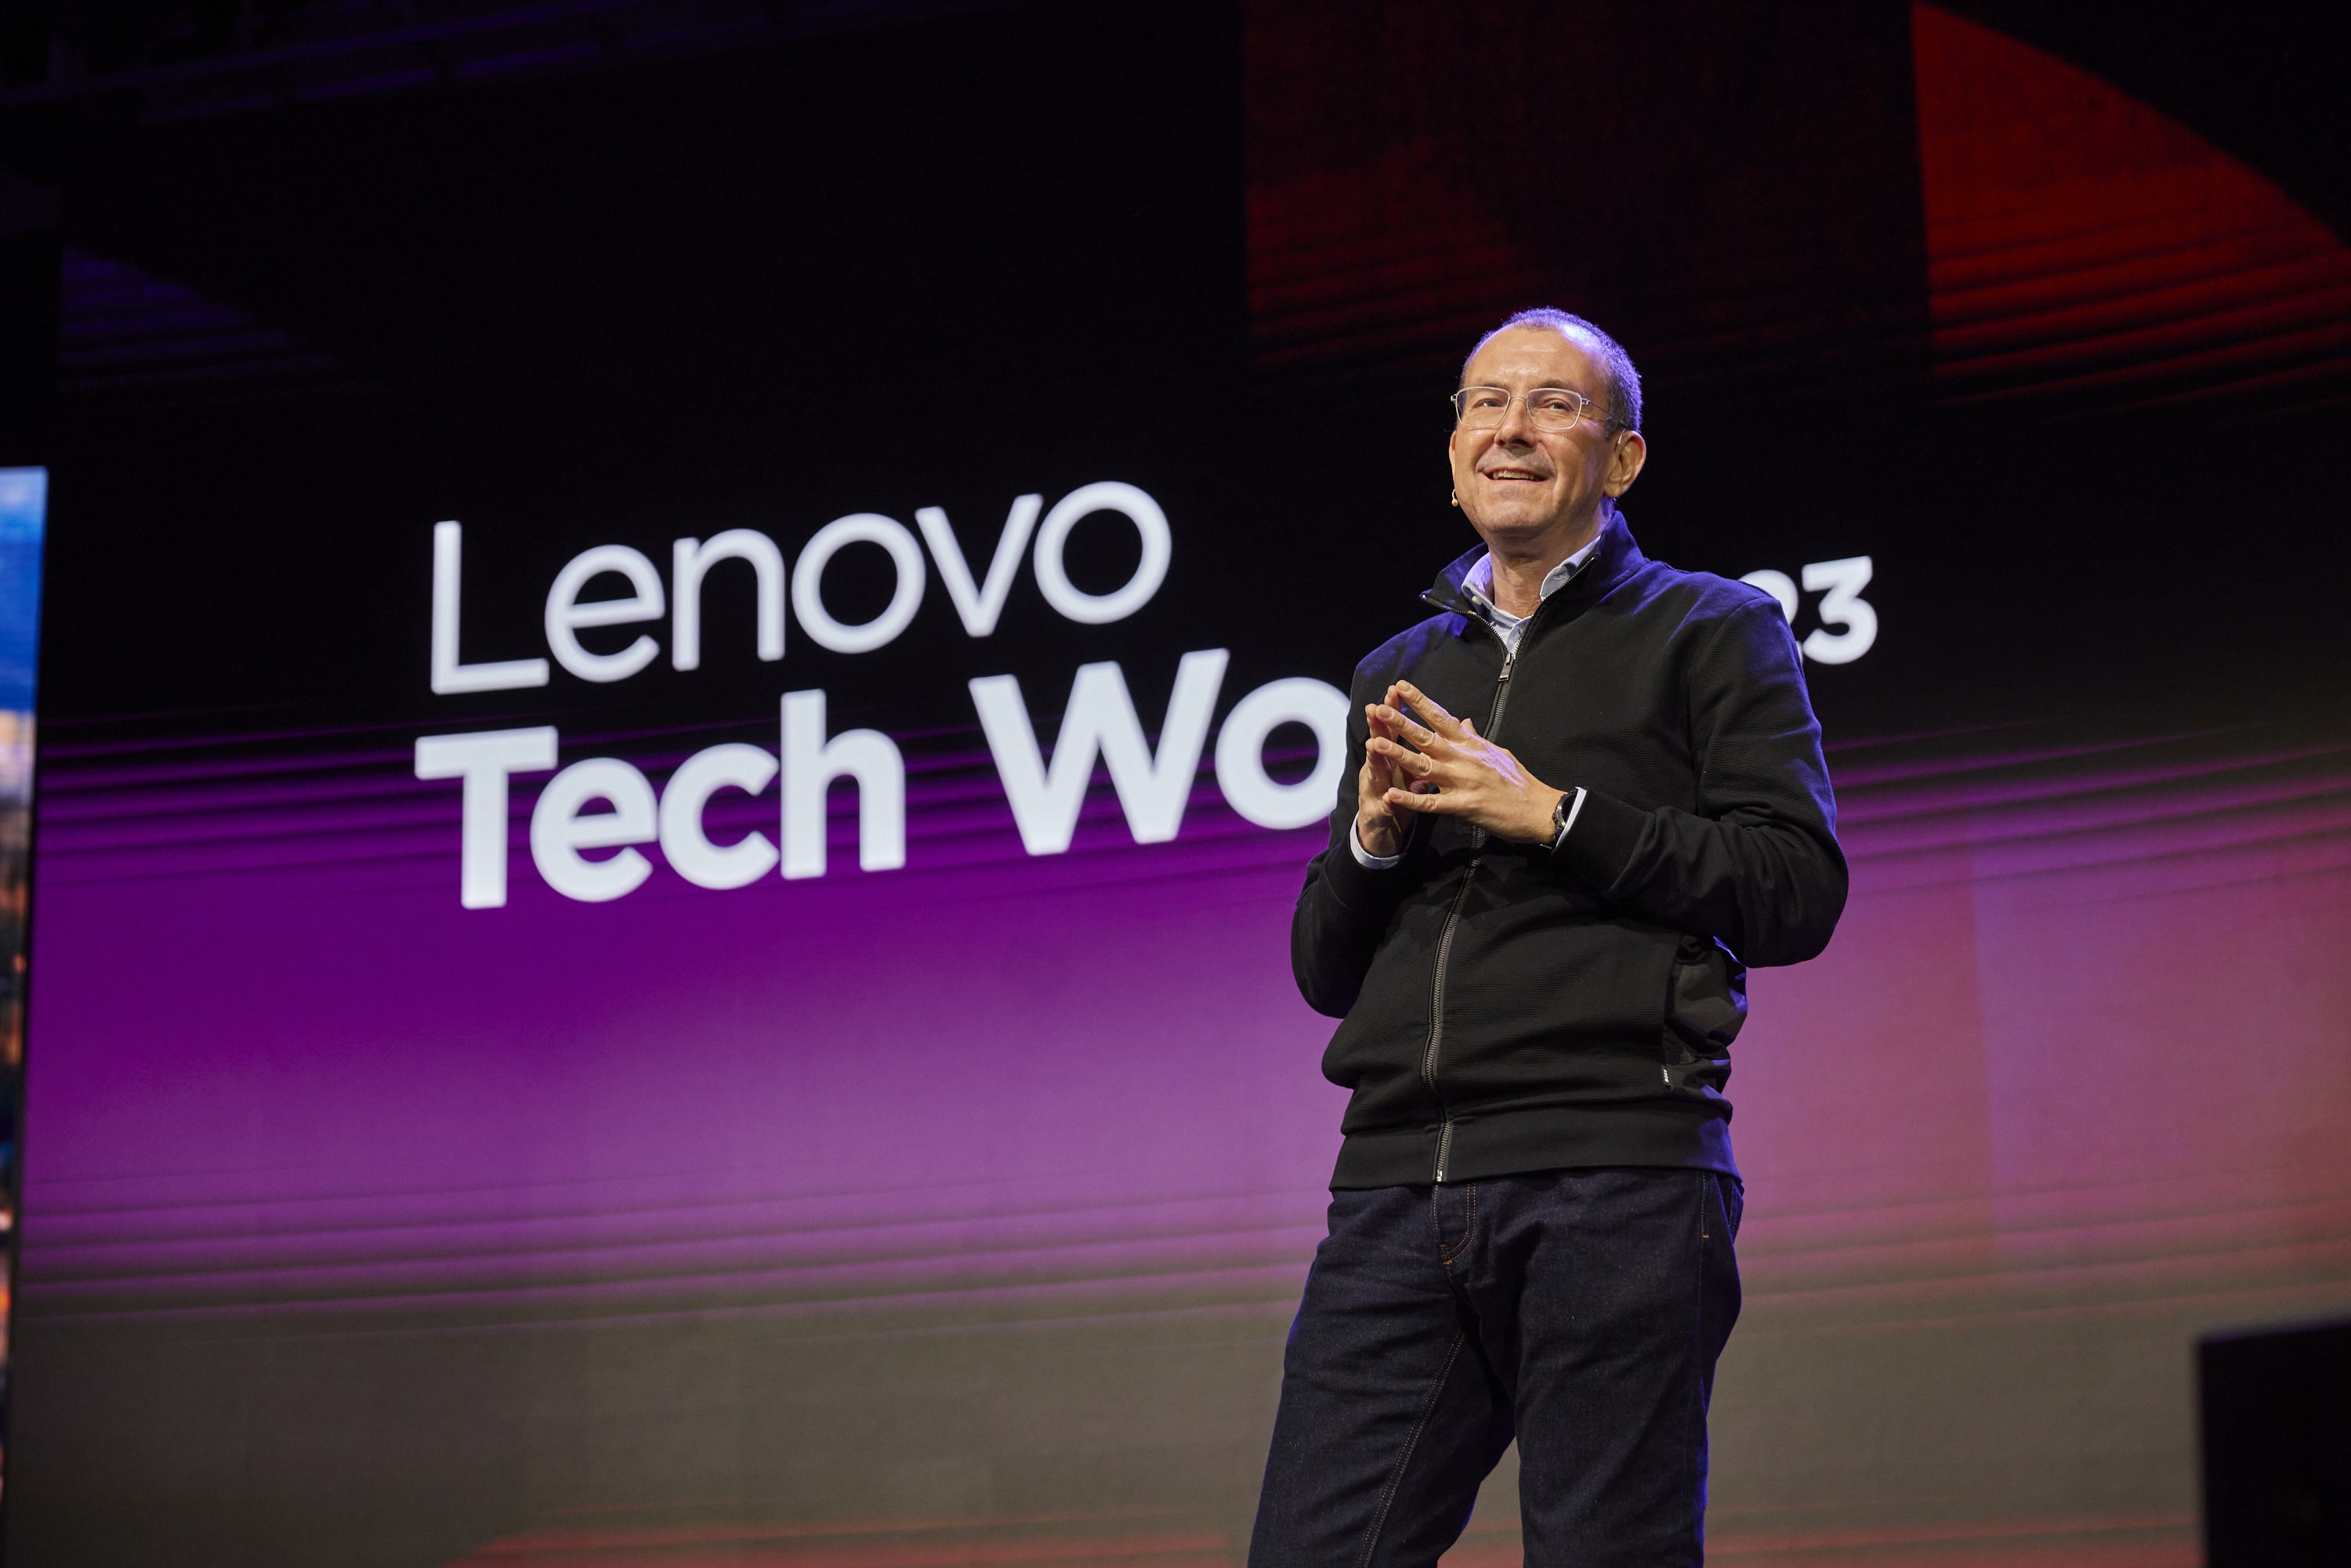 Lenovo tech world 23 Keynote 1490 min